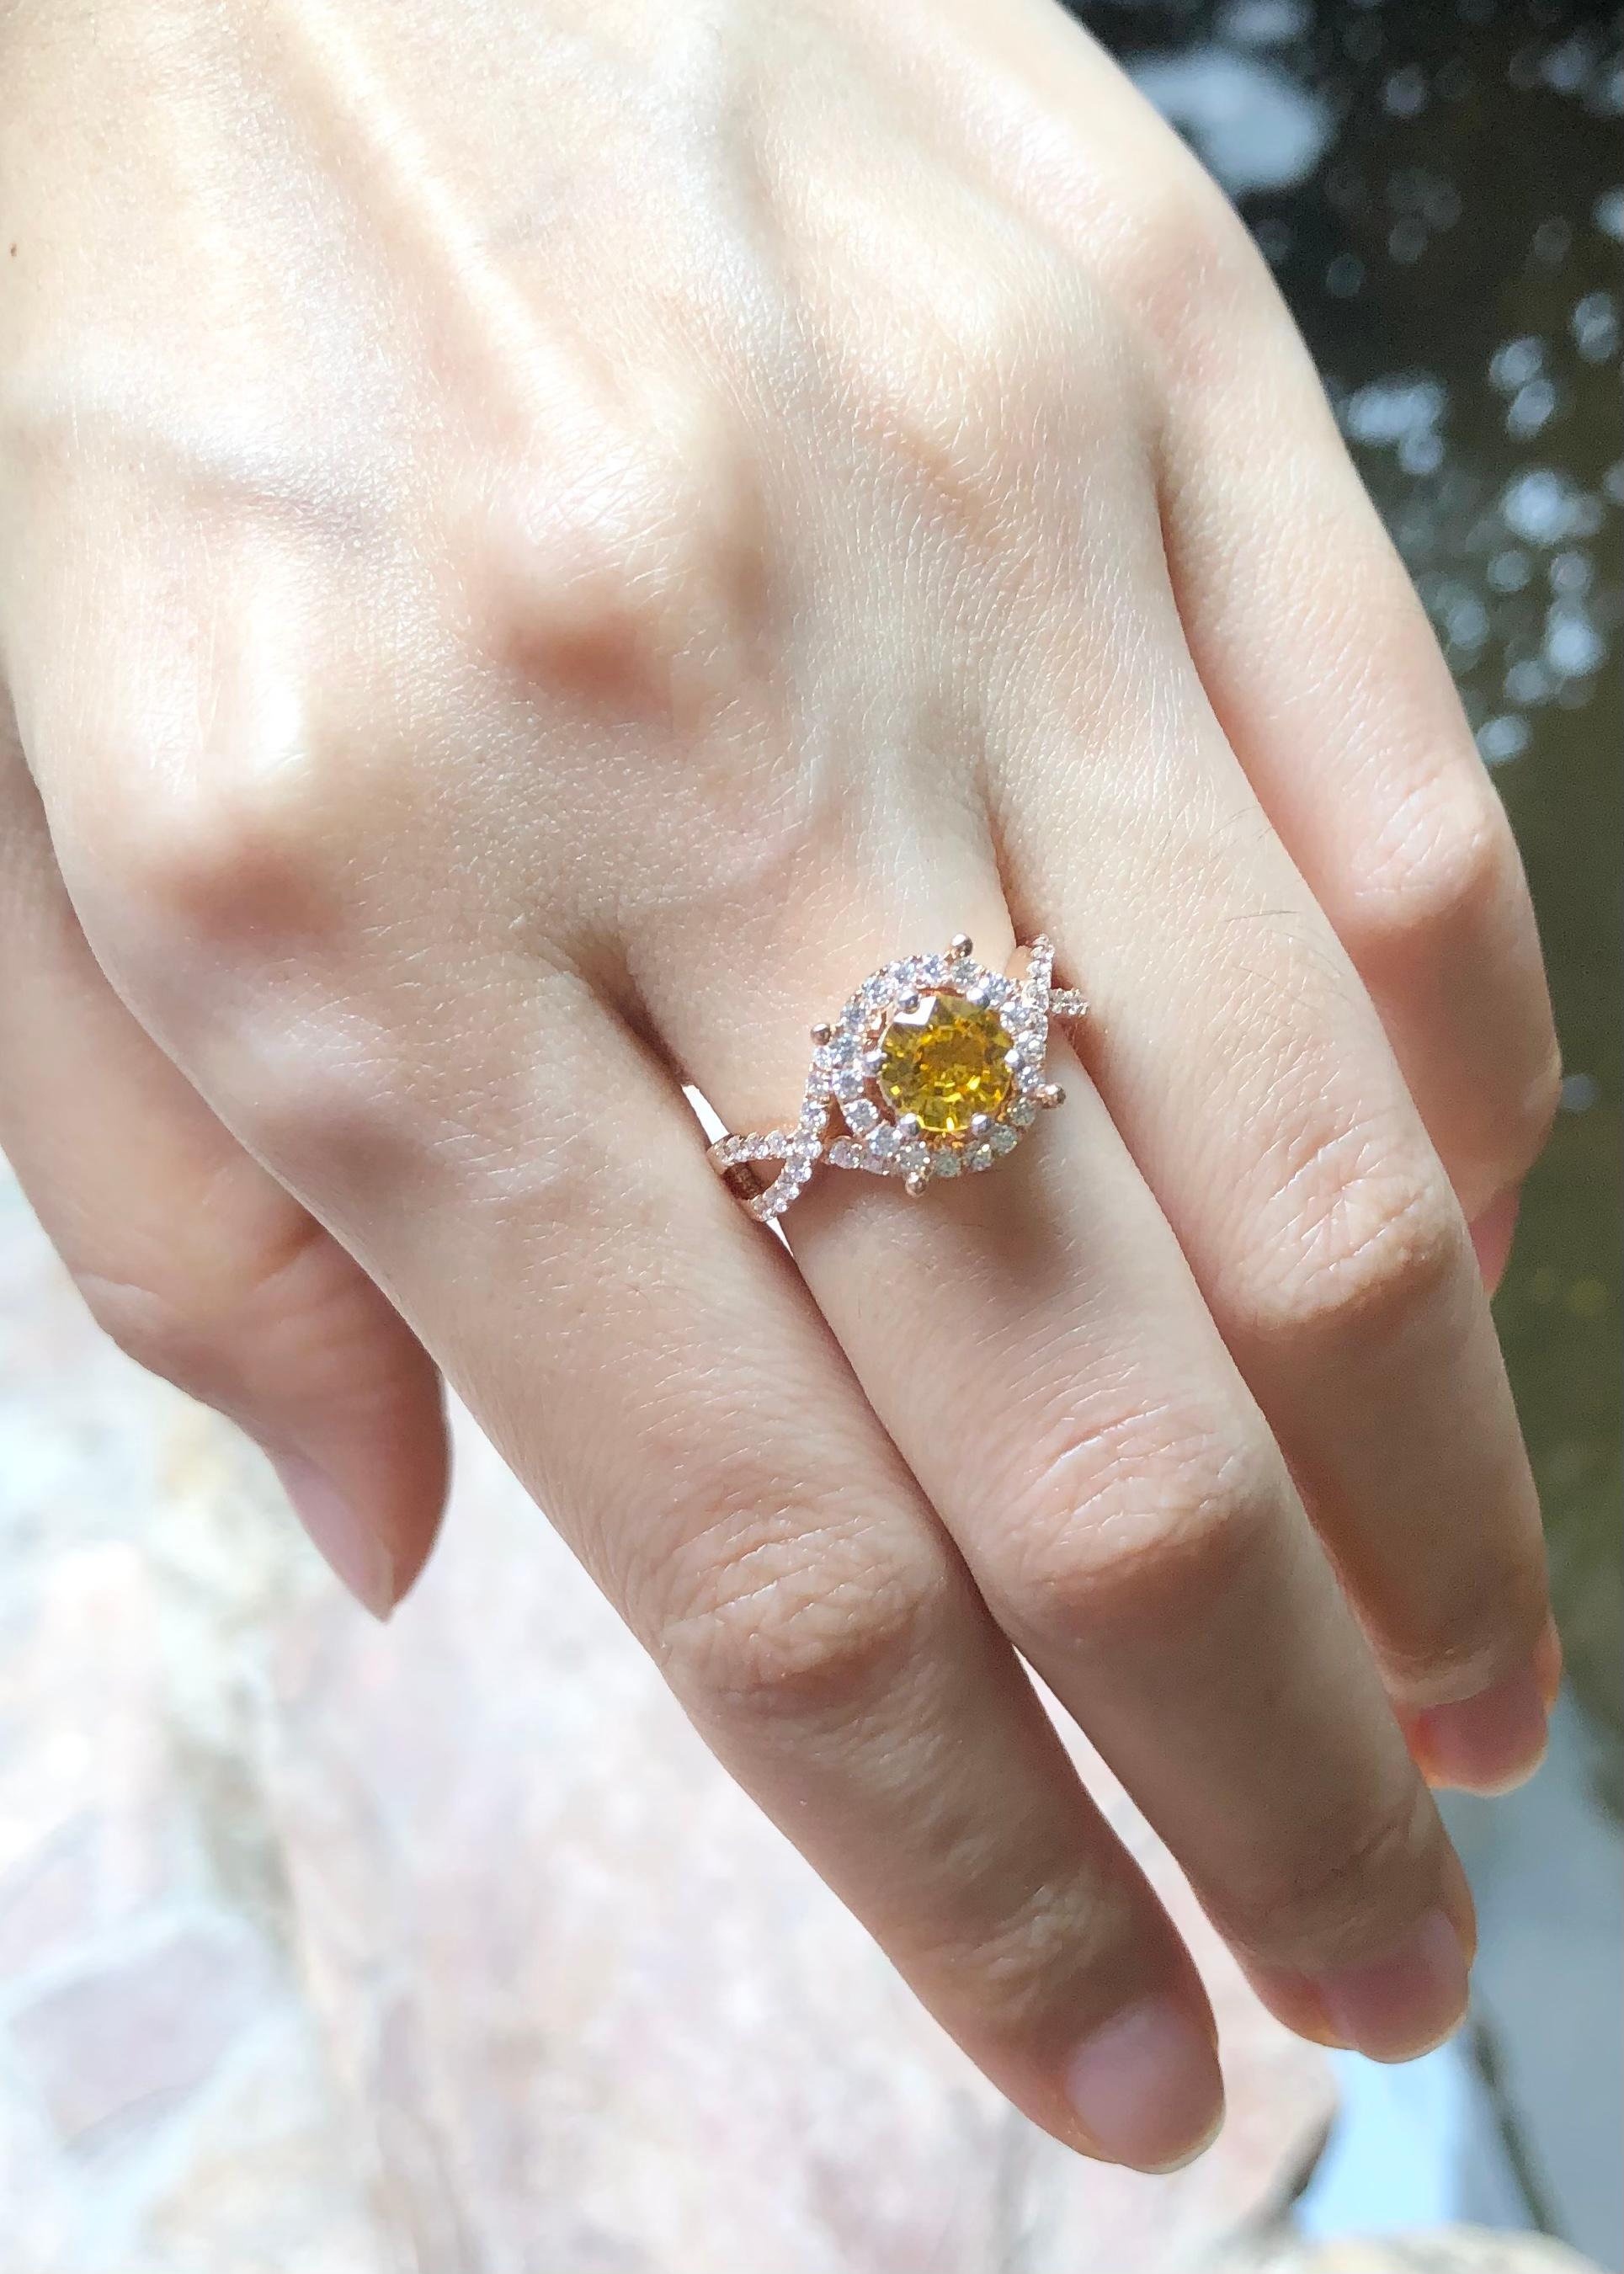 Yellow Sapphire 1.02 carats with Diamond 0.47 carat Ring set in 18 Karat Rose Gold Settings

Width:  1.9 cm 
Length: 1.9 cm
Ring Size: 53
Total Weight: 5.64 grams

Yellow Sapphire 
Width:  0.7 cm 
Length: 0.7 cm


